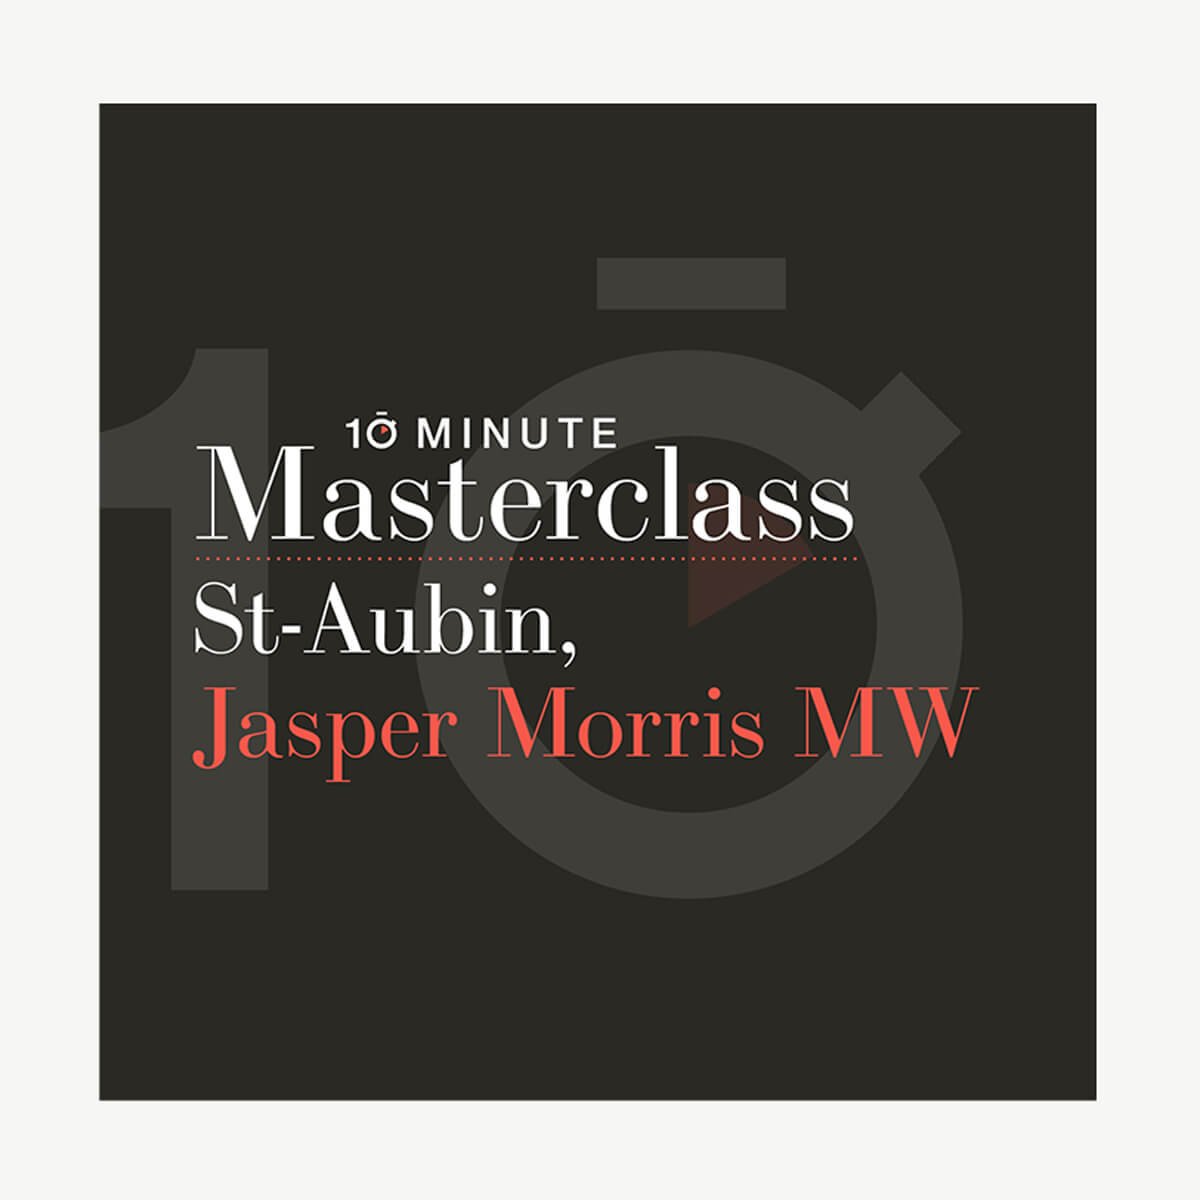 ▻ St-Aubin with Jasper Morris MW